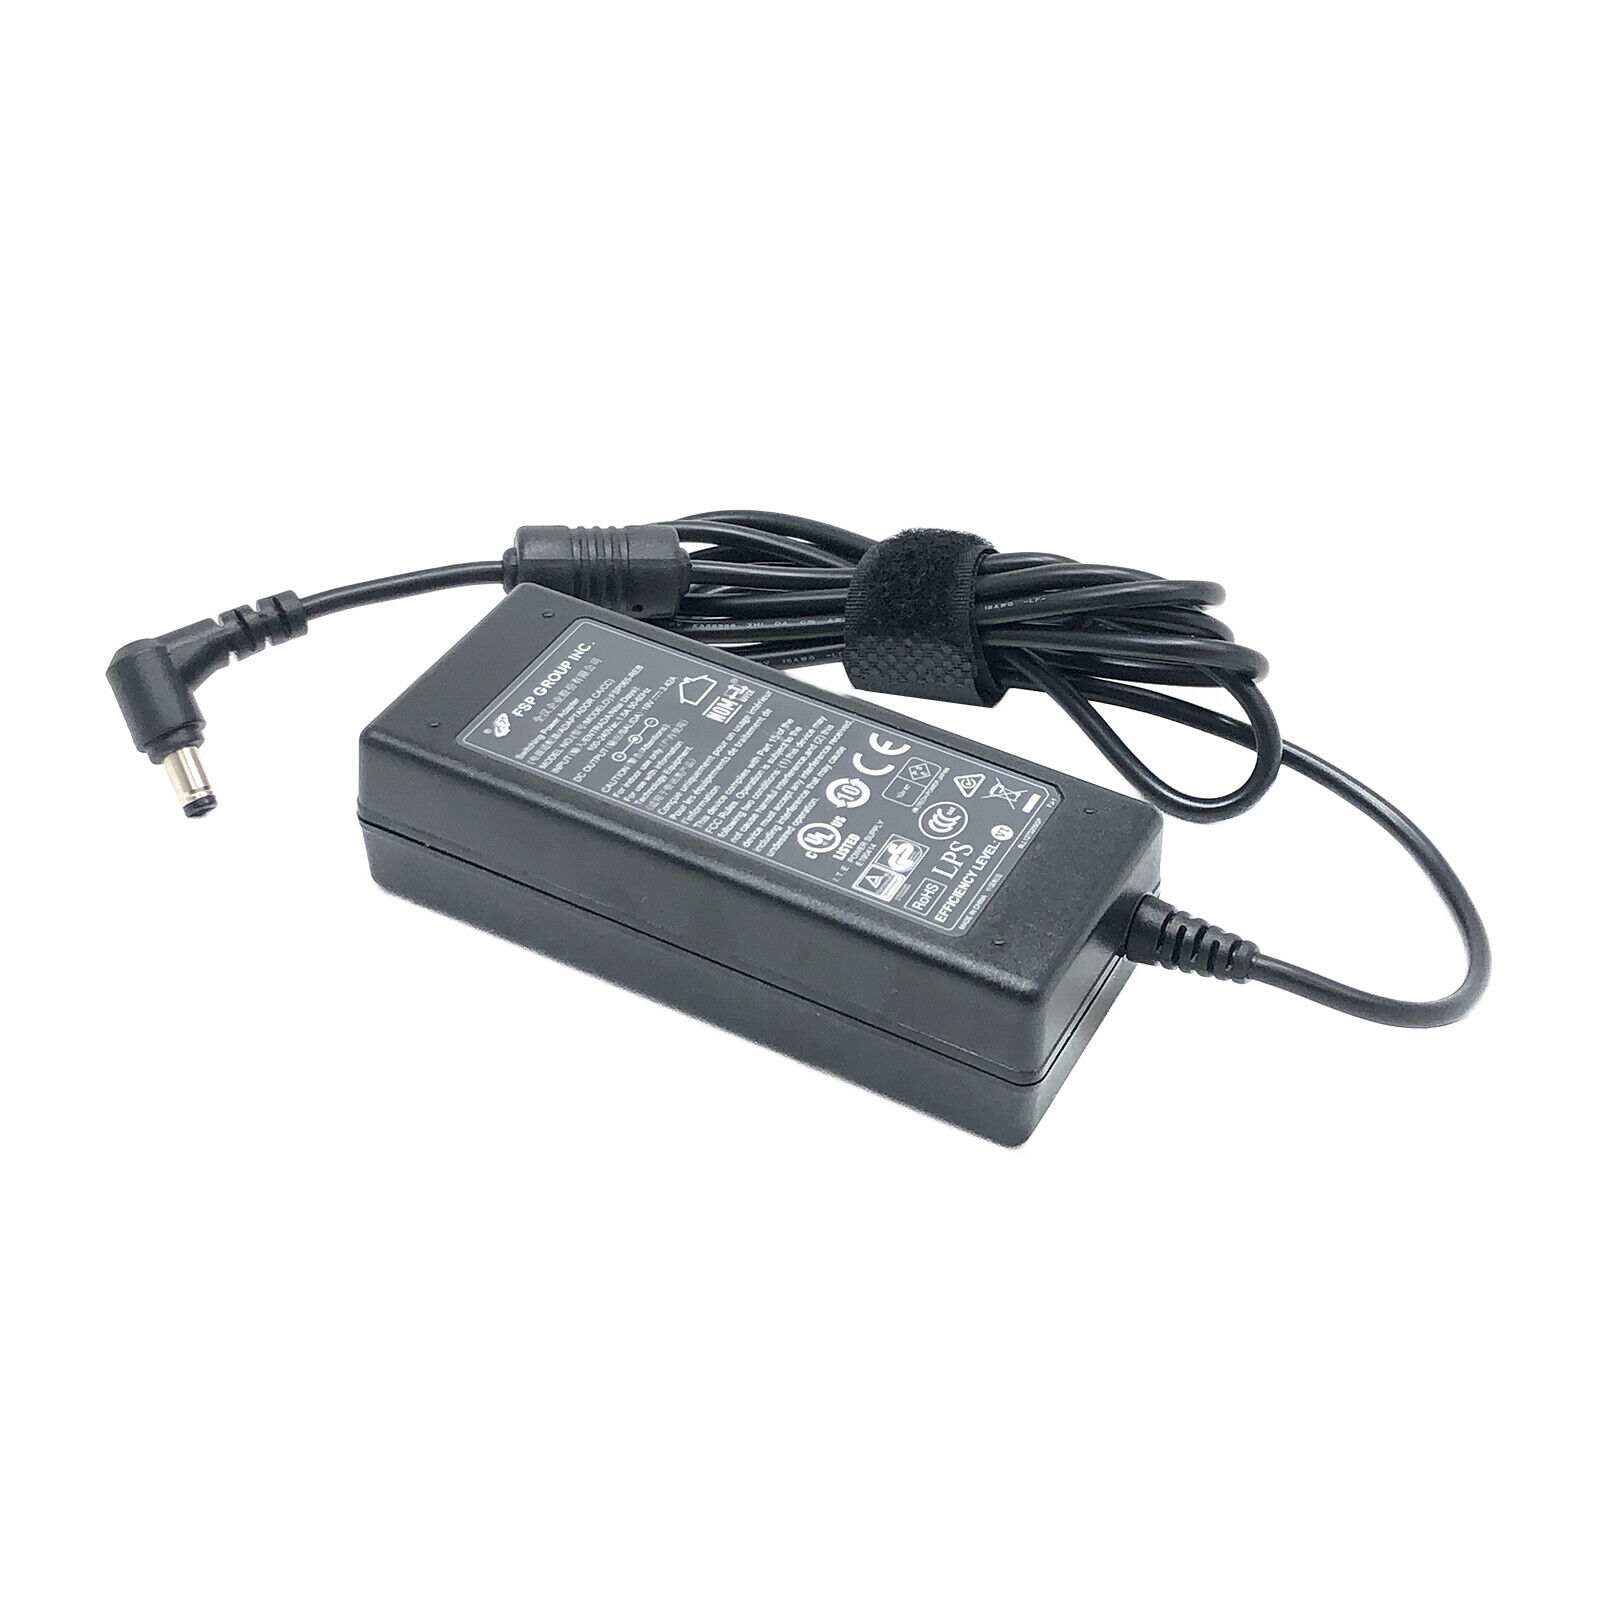 *Brand NEW*Genuine FSP FSP065-REBN2 19V 3.42A 65W AC/DC Switching Power Adapter Power Supply